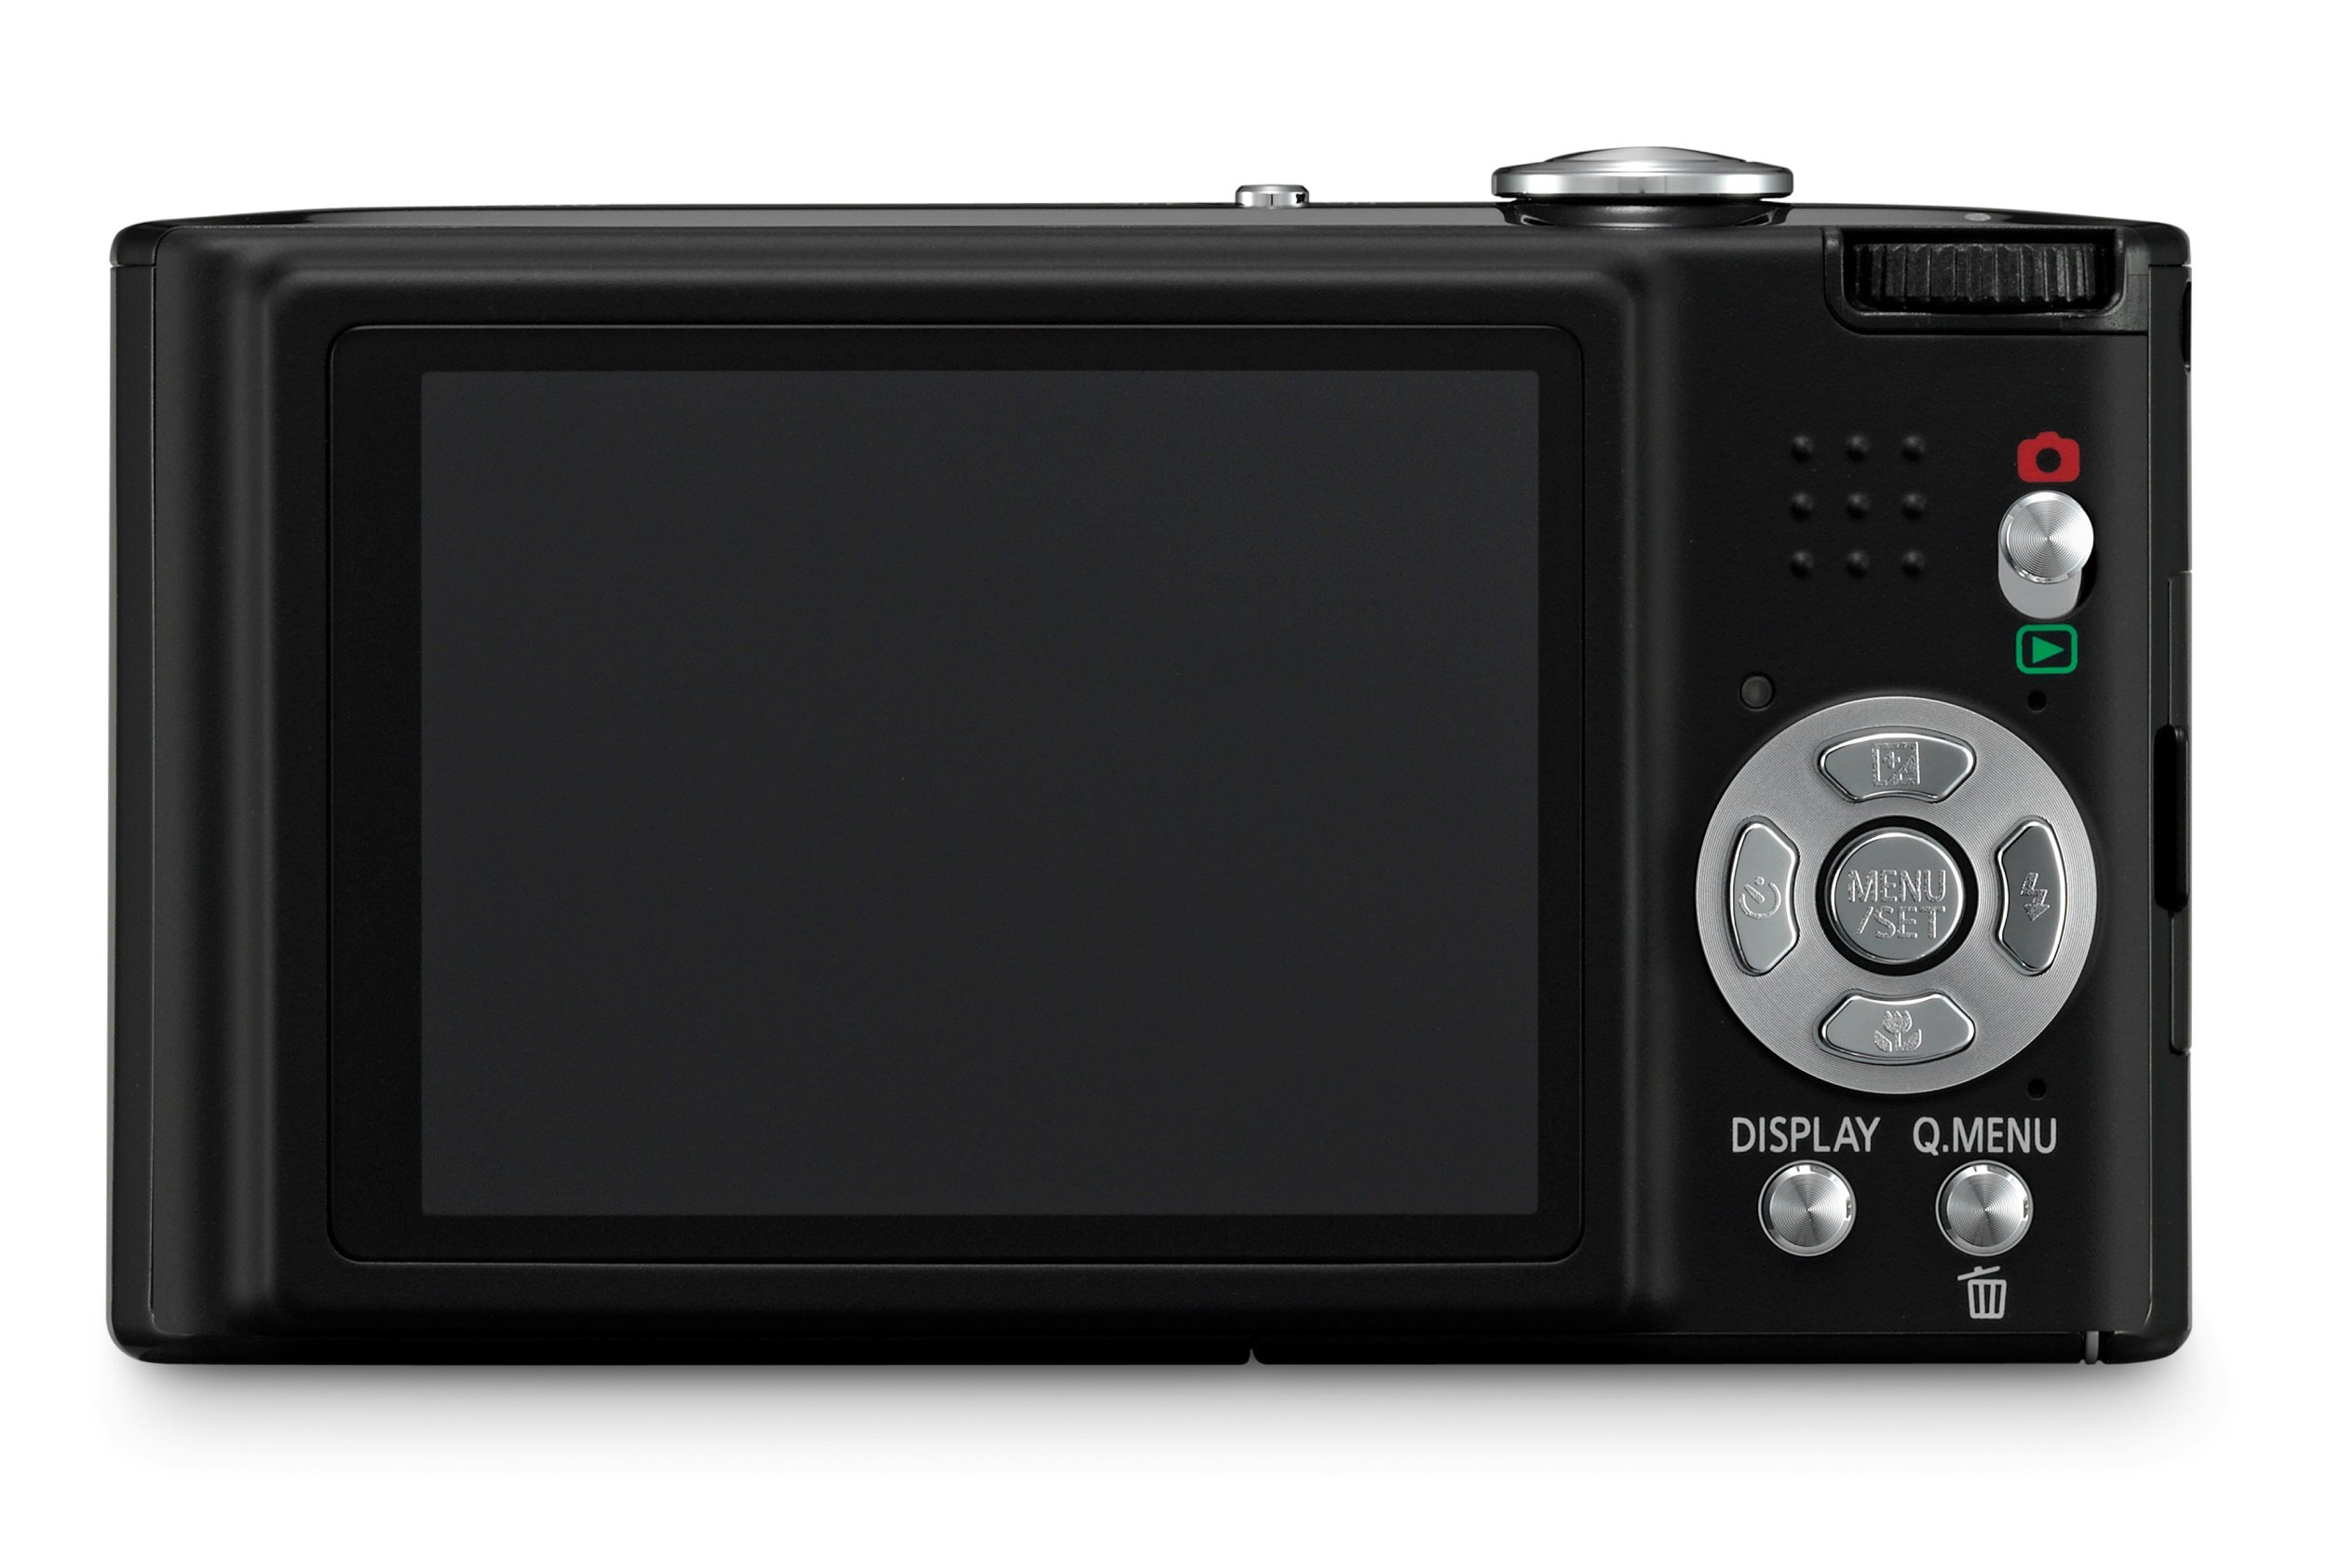 Panasonic Lumix DMC-FX48 12MP Digital Camera with 5x MEGA Optical Image Stabilized Zoom and 2.5 inch LCD (Black)